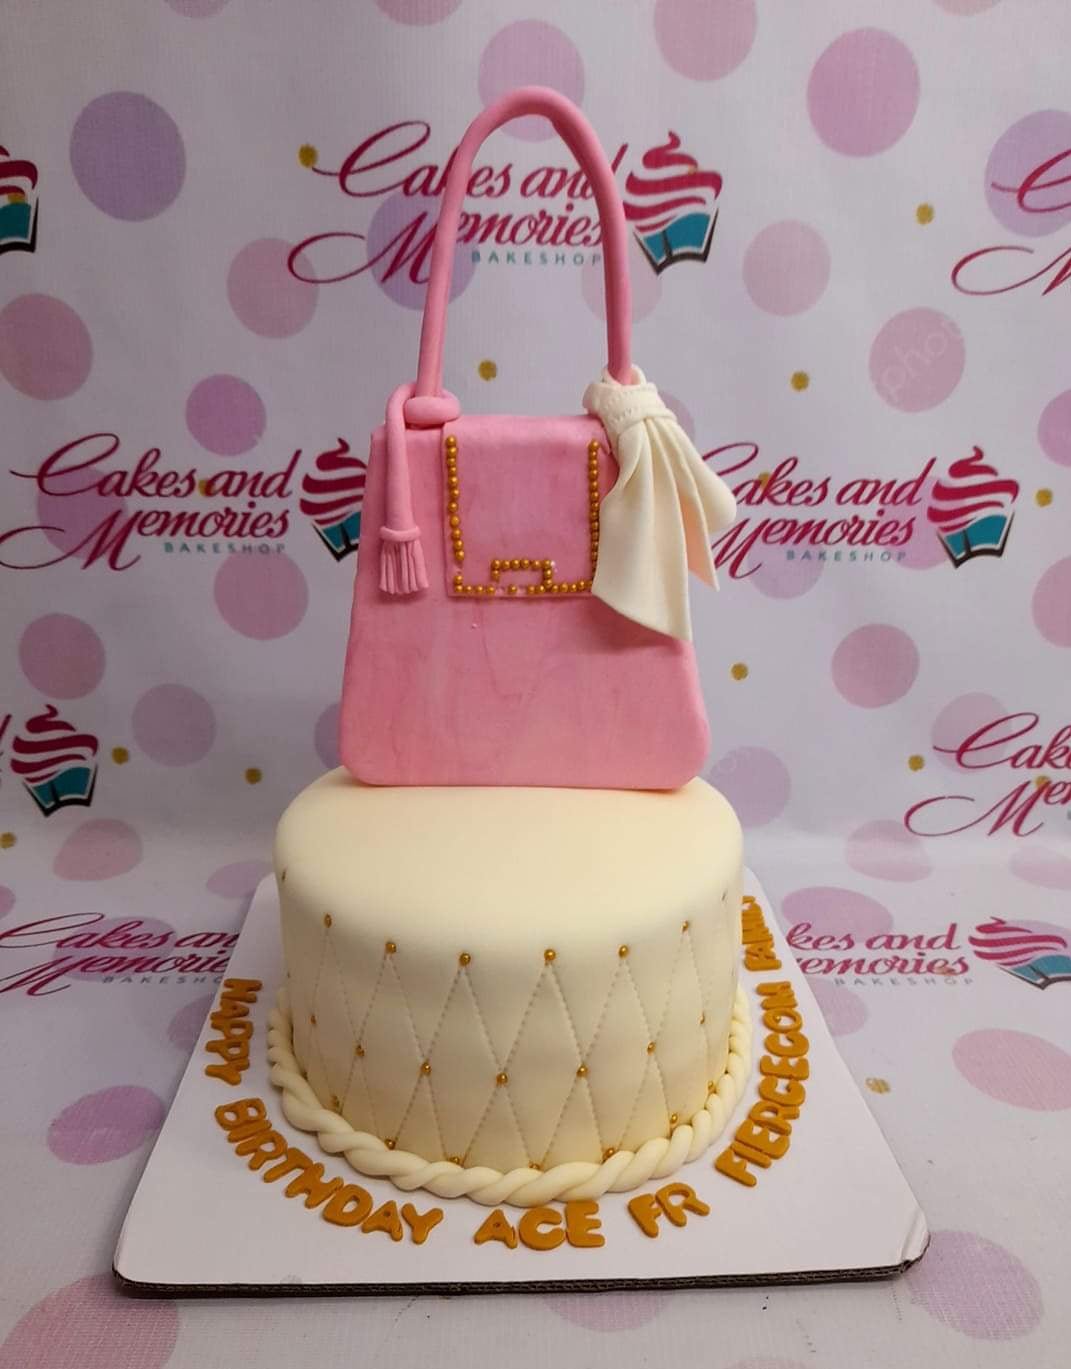 Shopping Bag Cake - Tastefully Done Cakes | Facebook